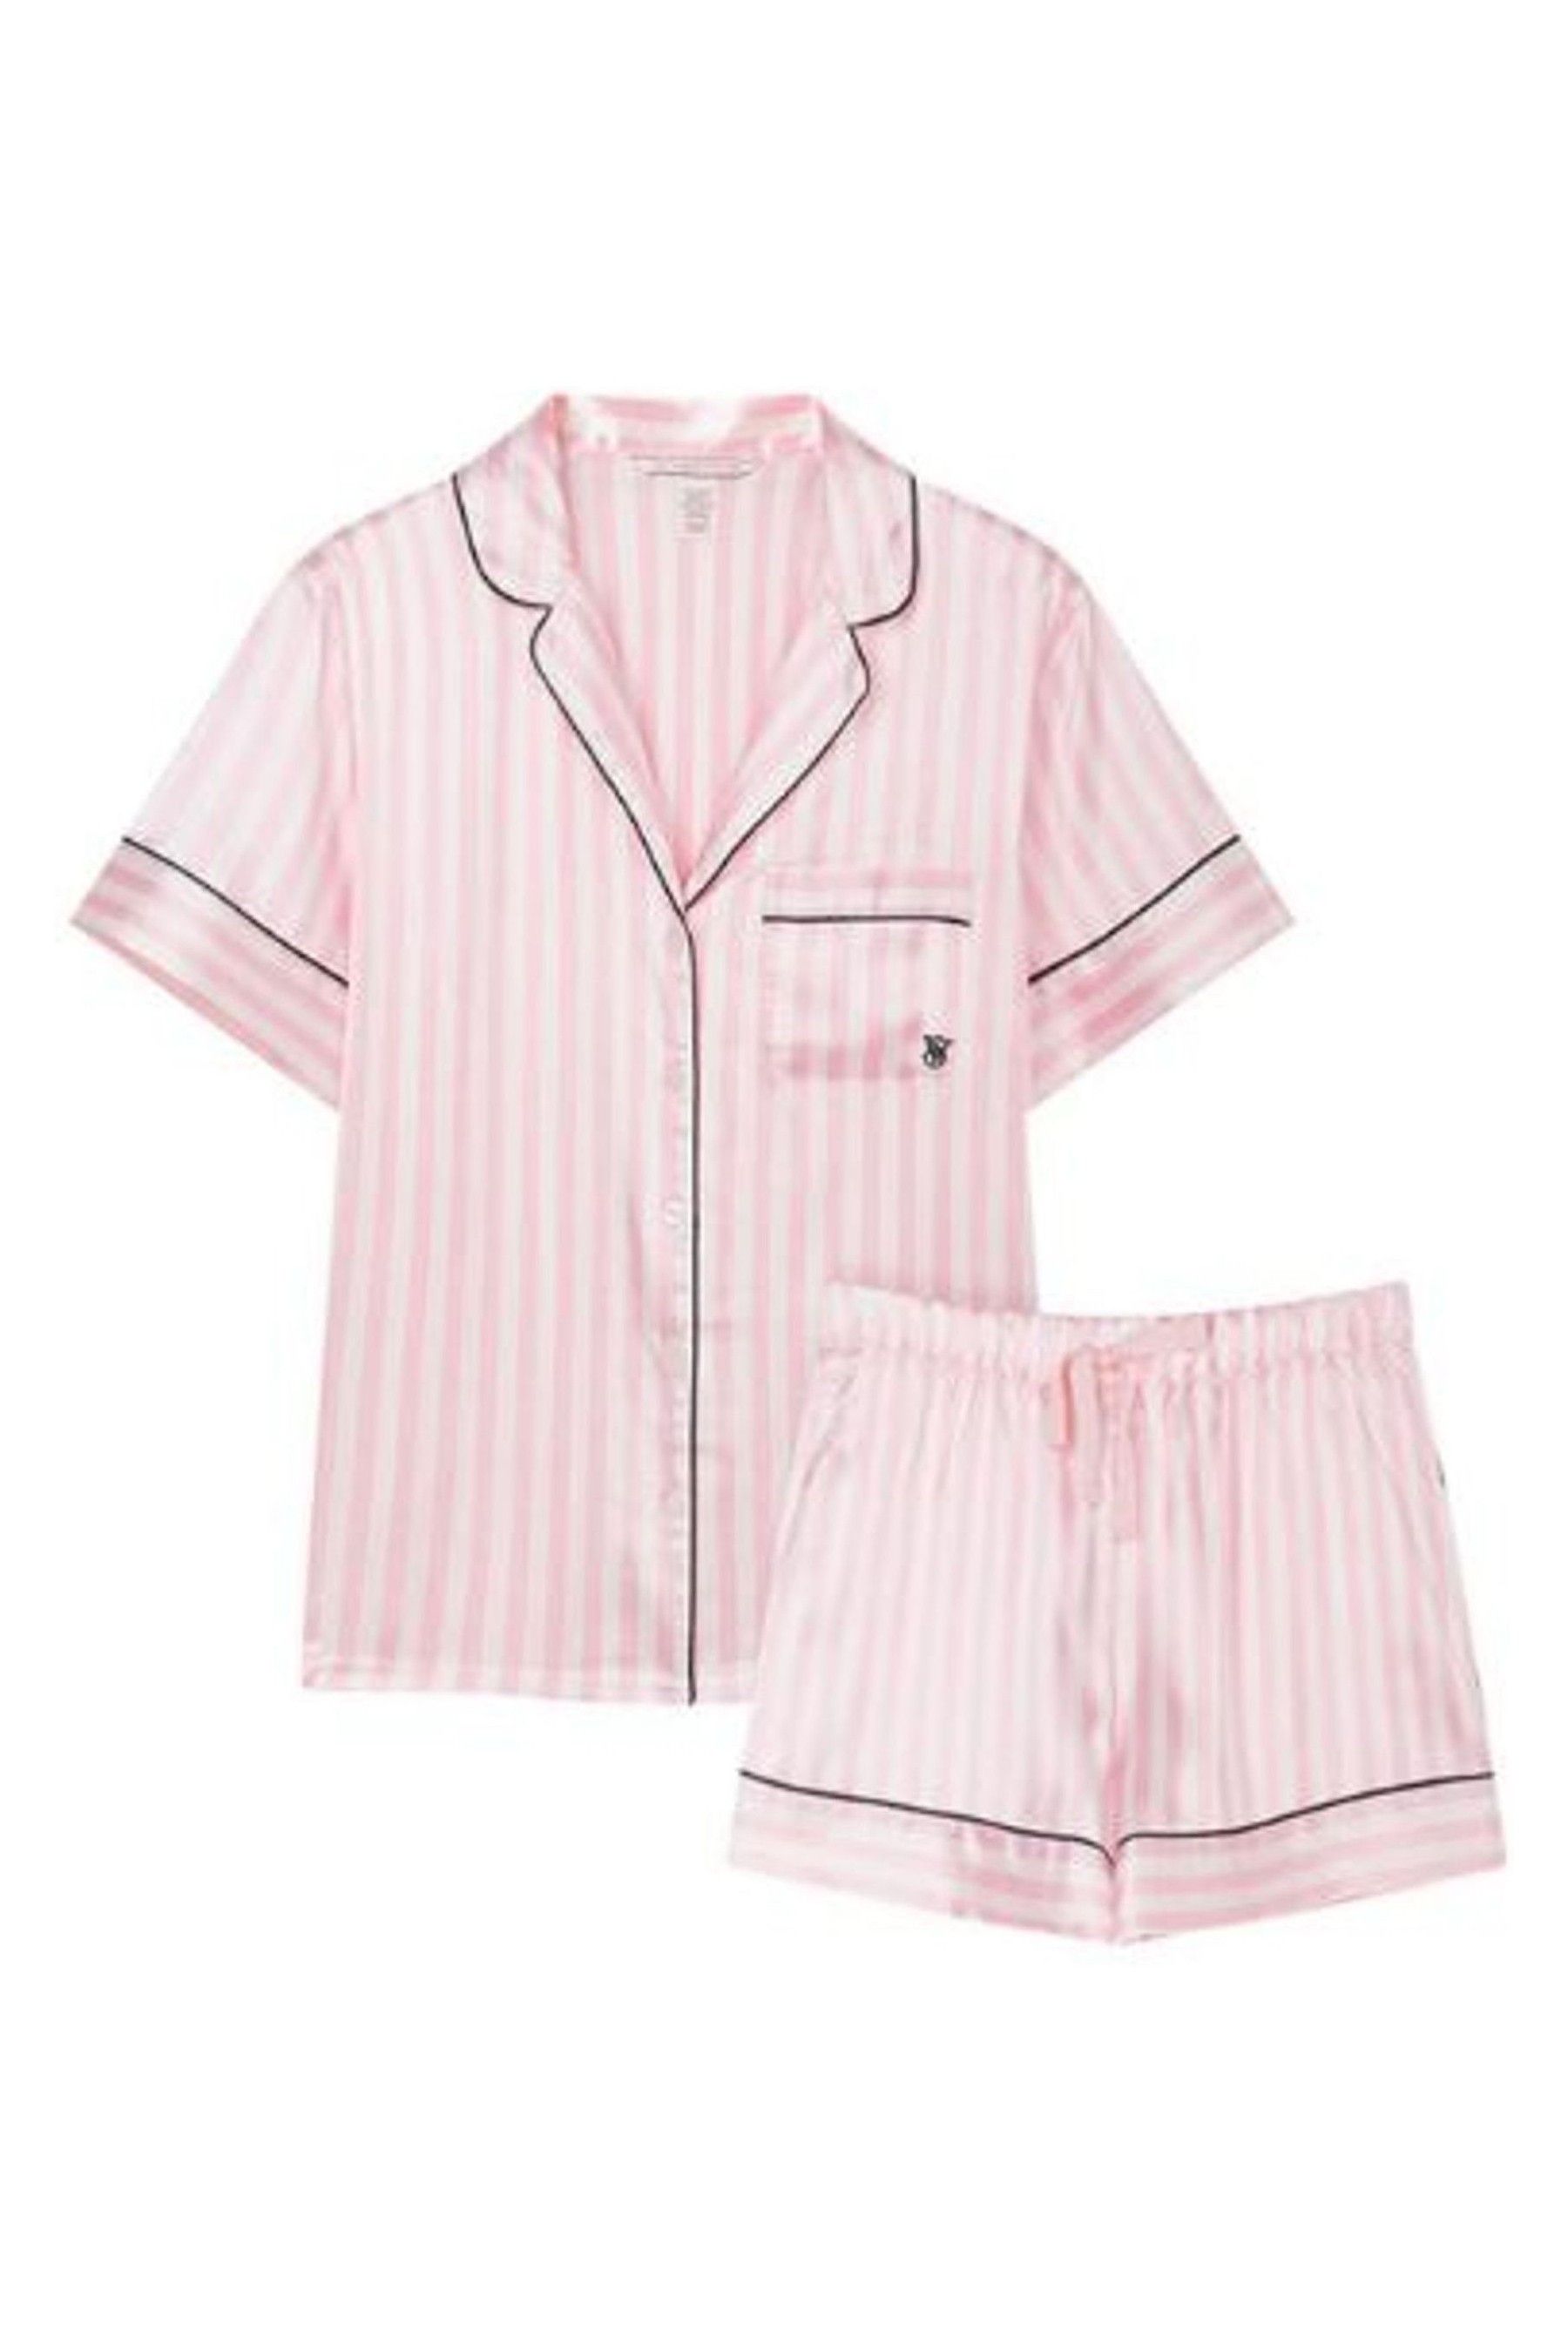 Victoria's Secret Pretty Blossom Iconic Stripe Pink Satin Short Pyjamas ...